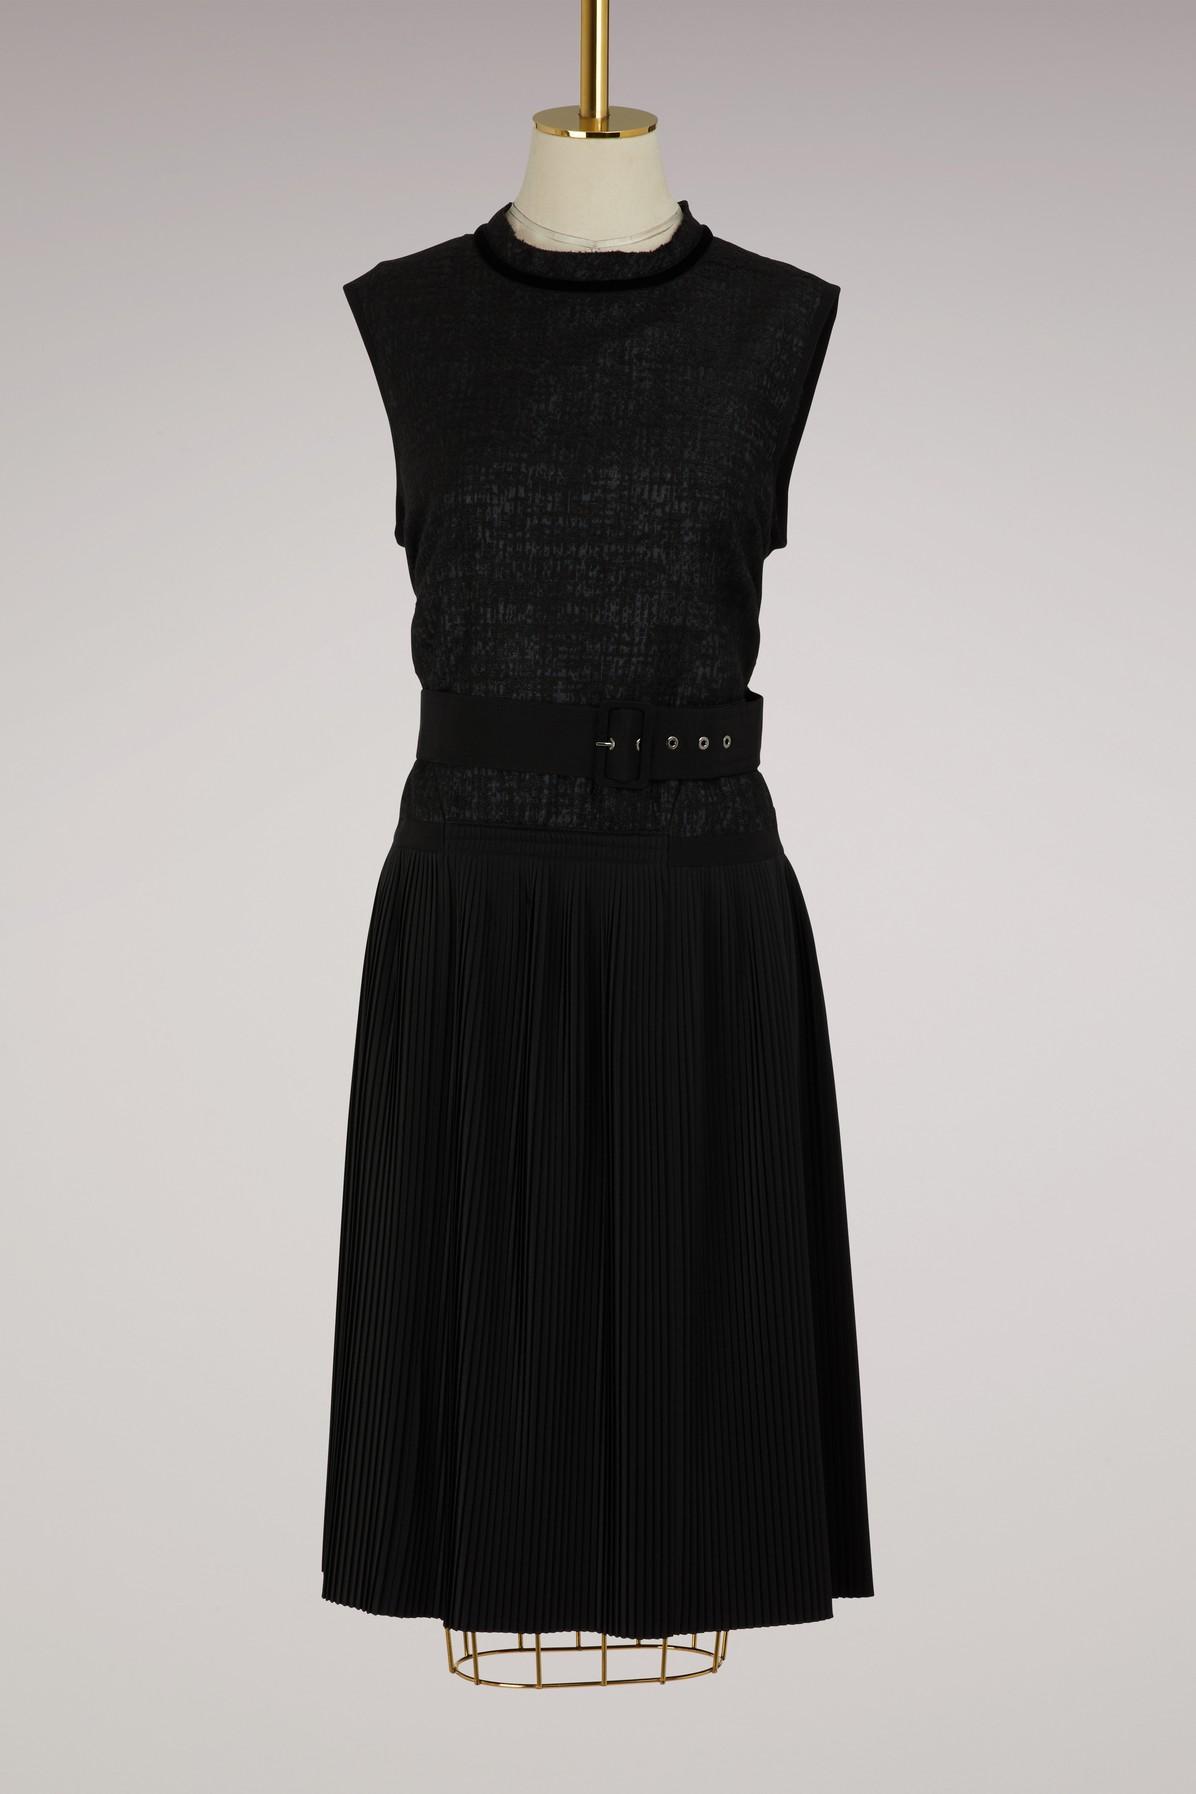 Lyst - Moncler Belted Sleeveless Dress in Black